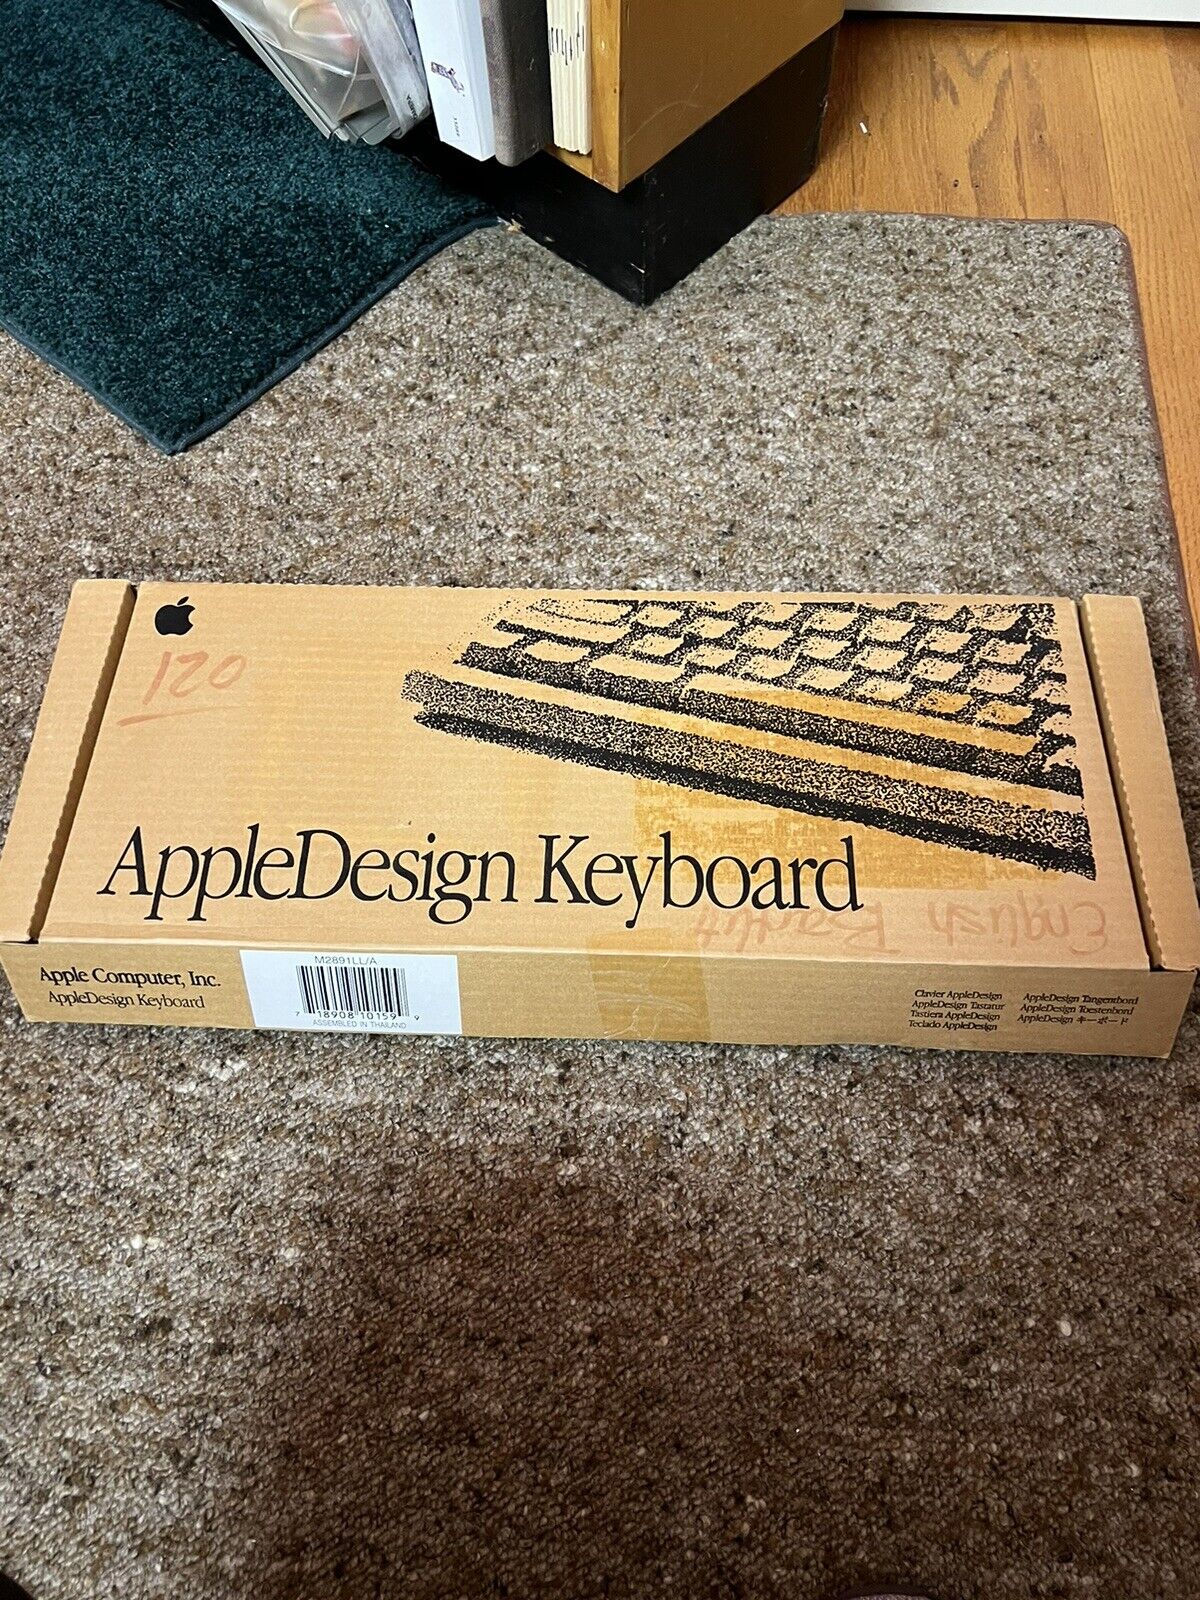 AppleDesign Keyboard – M2980 – For Mac OPEN BOX Vintage